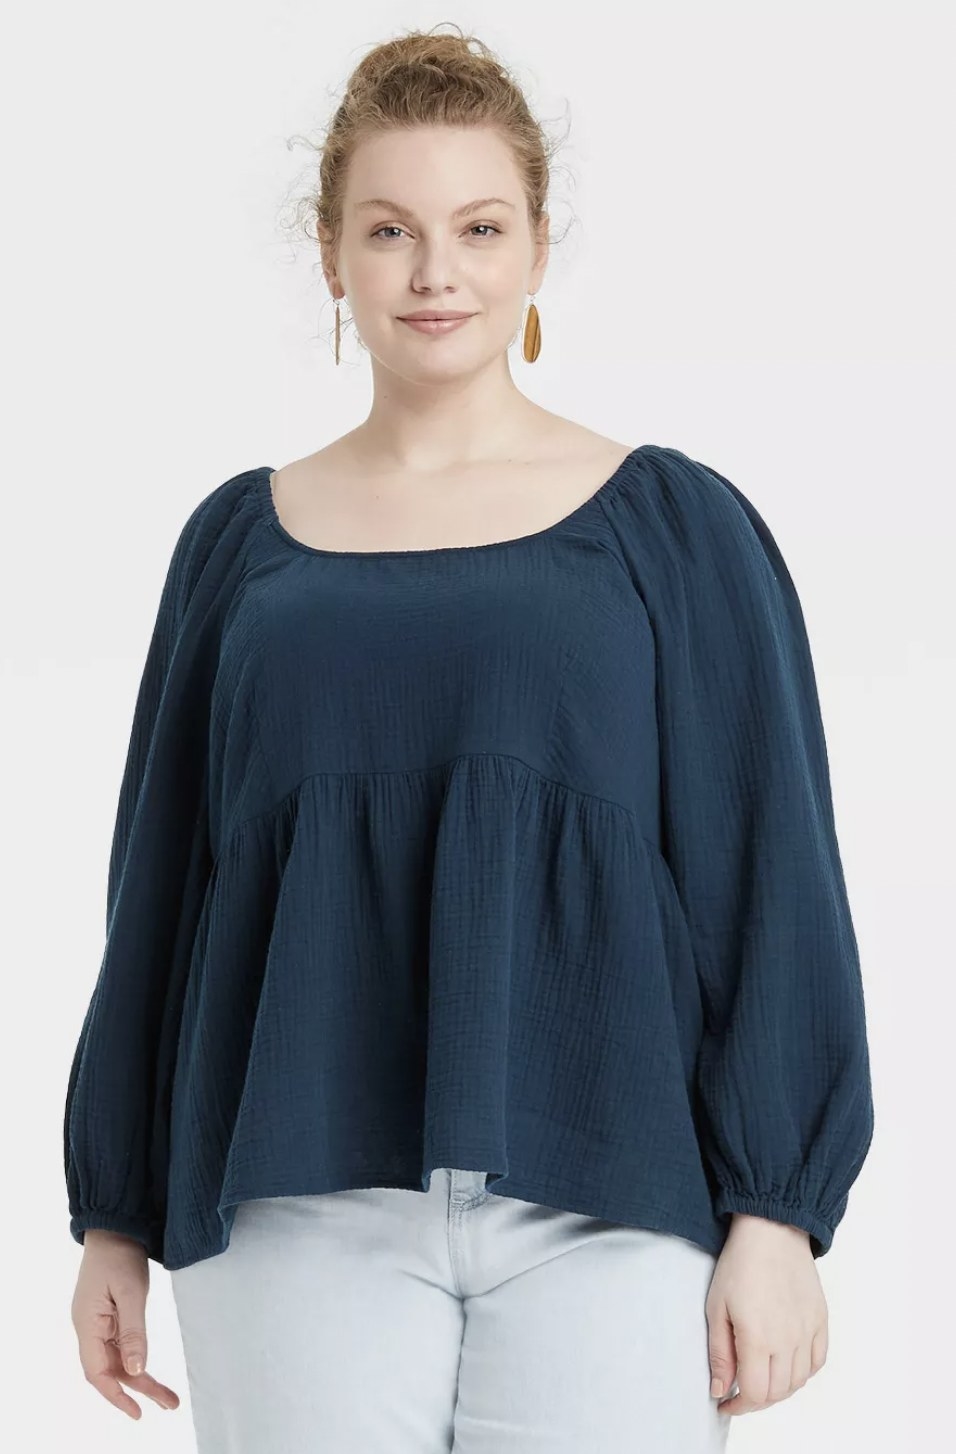 model wearing the blouse in blue